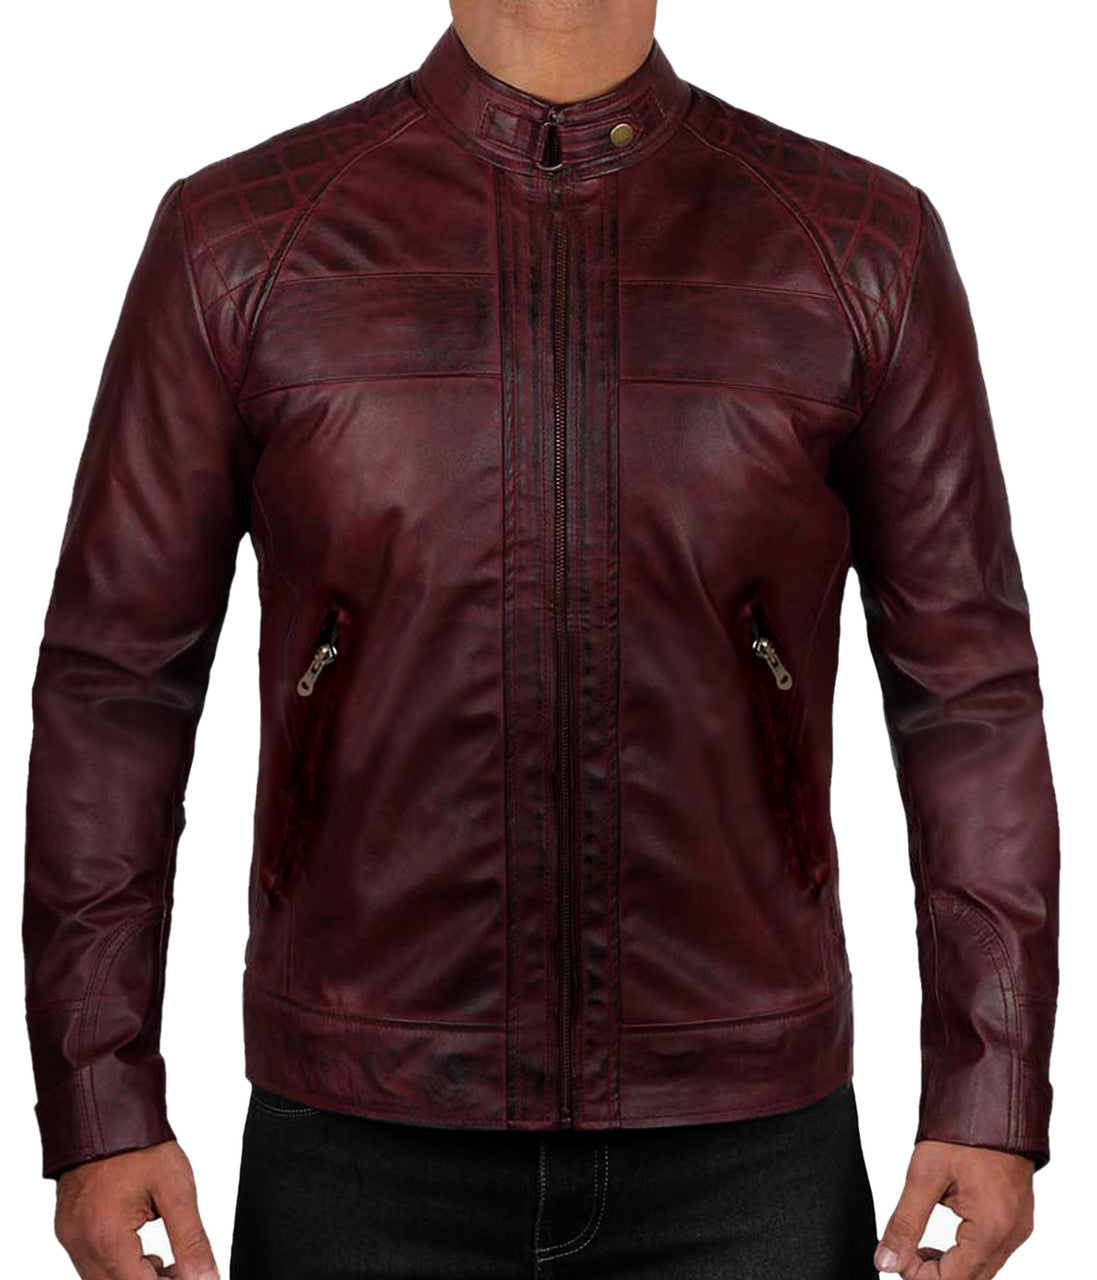 handmade biker leather jacket for men maroon winter jacket burnt red leather jacket men's luxury leather jacket cheap leather jackets genuine leather jacket for men stylish winter jacket for men men's leather jacket 